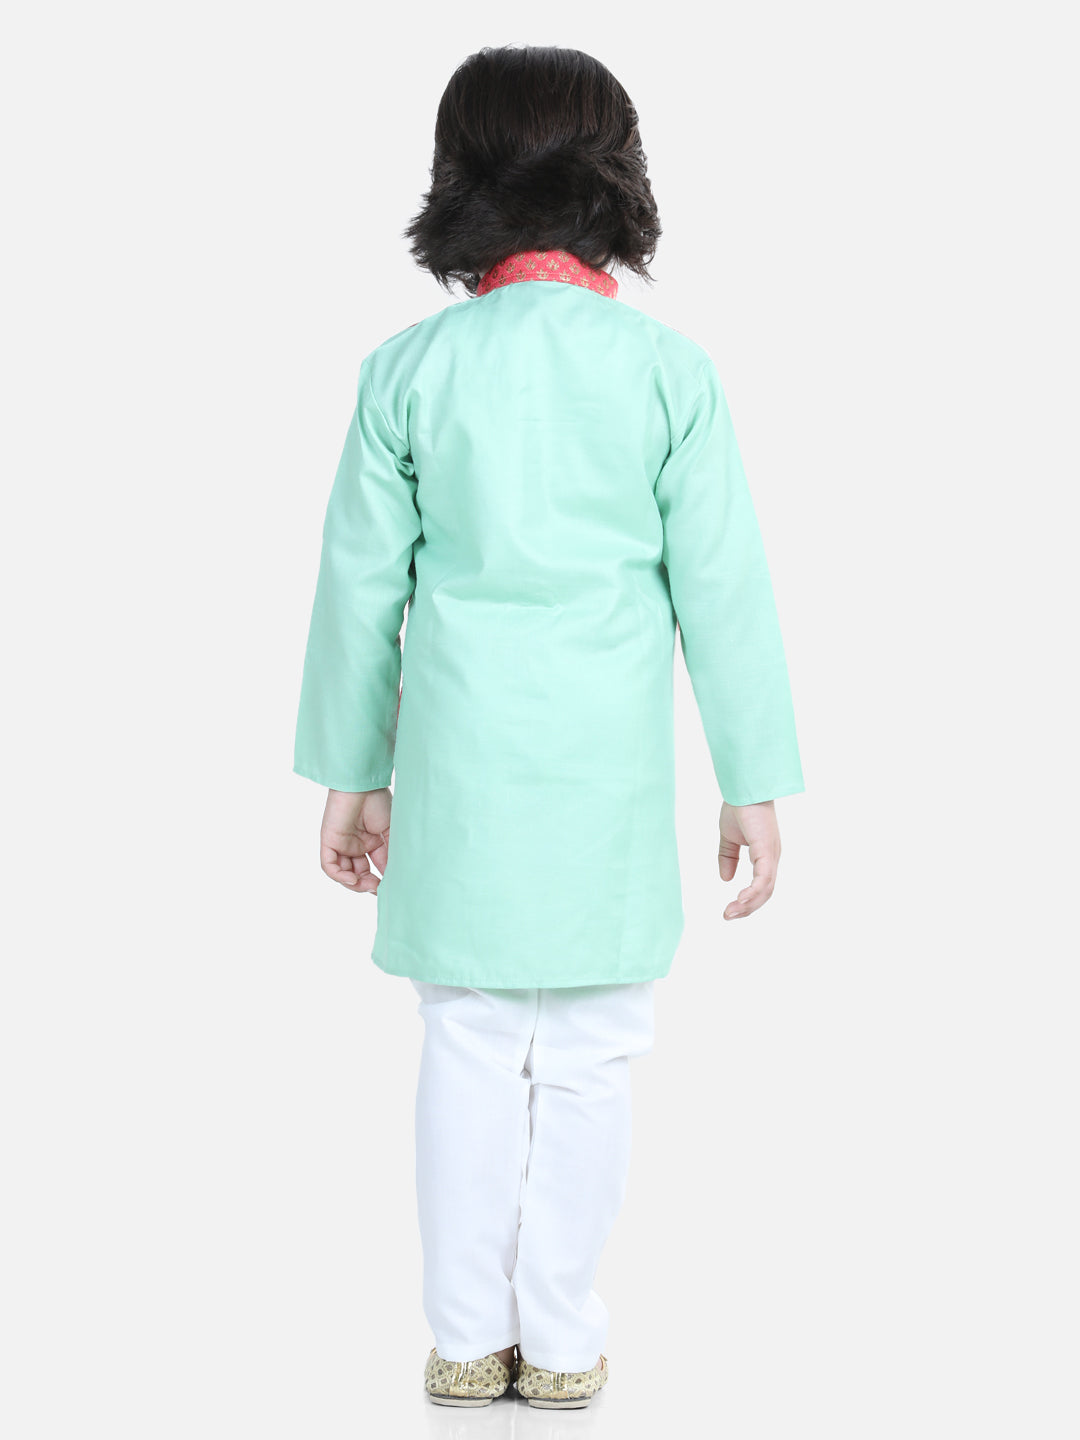 BownBee Full Sleeves Solid Kurta And Pyjama With Sleeveless Ethnic Motif Print Jacket Green